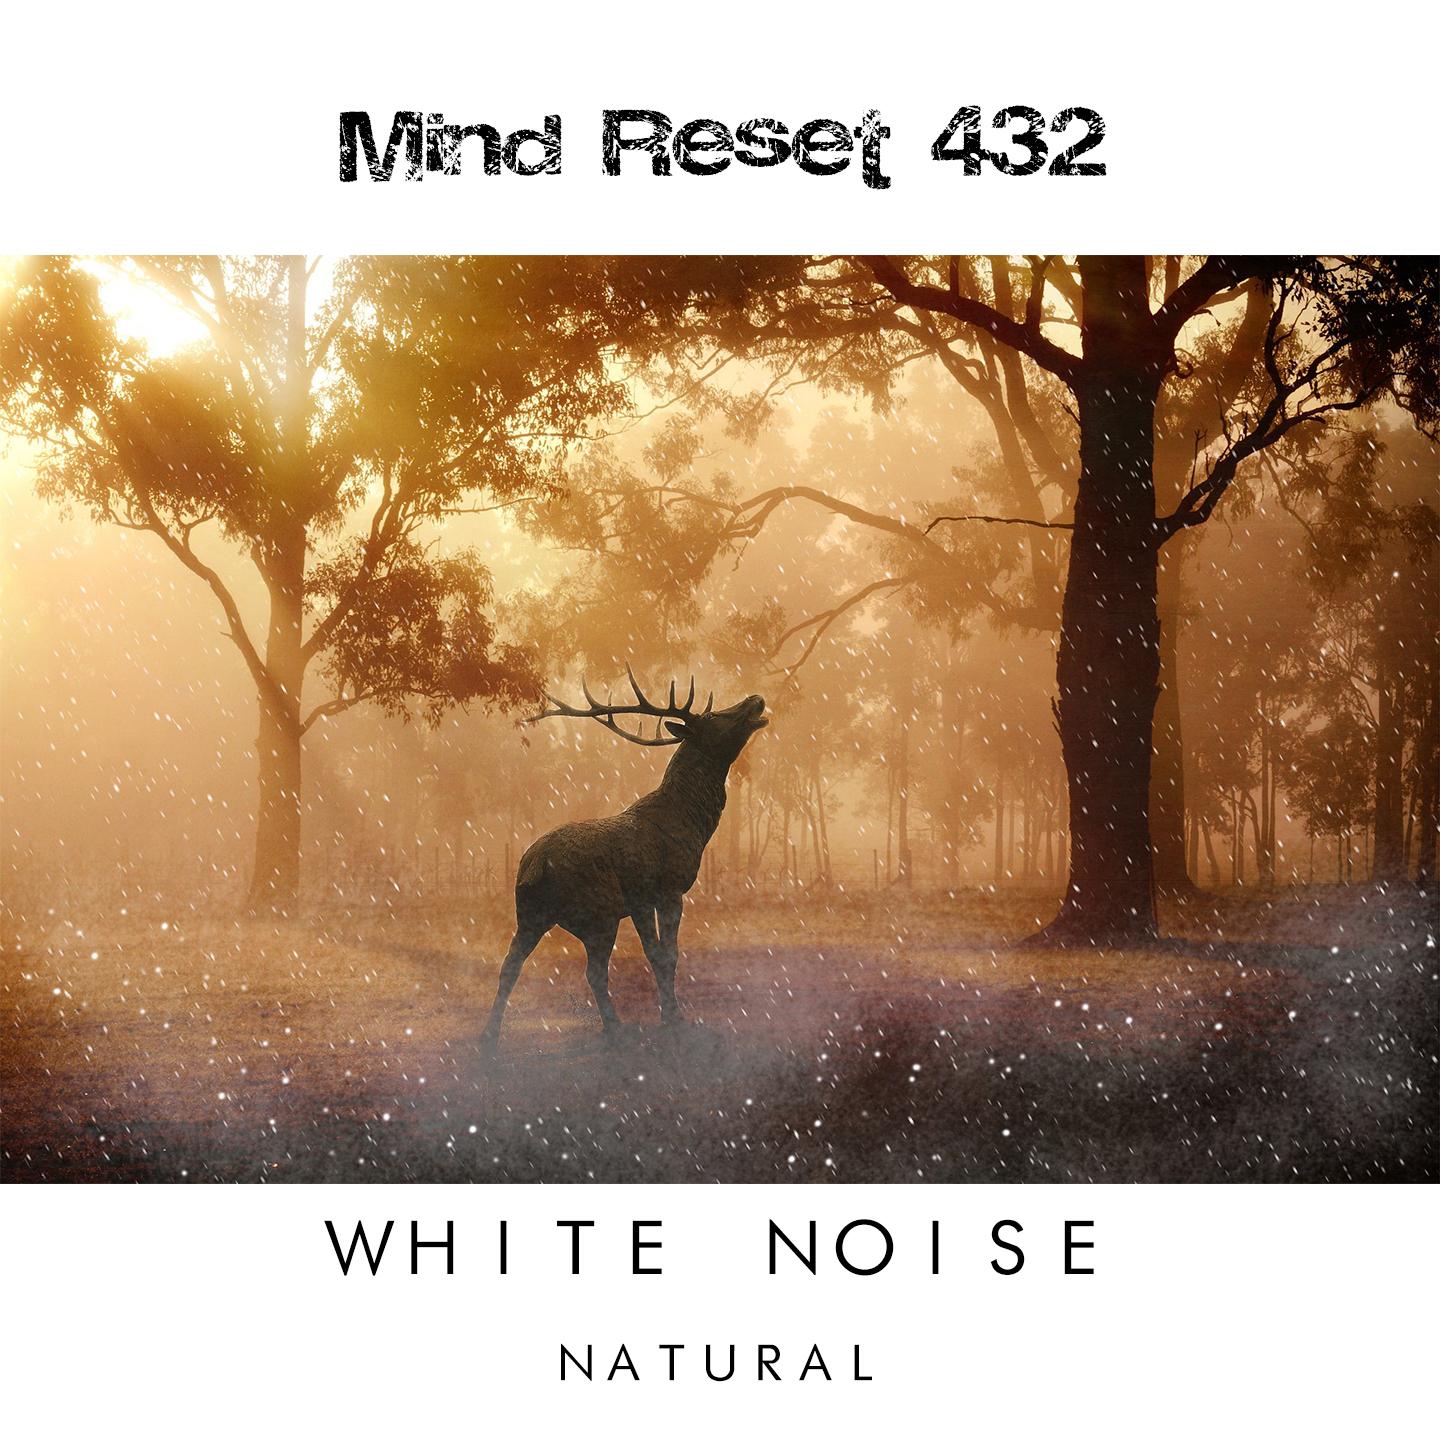 White noise (Natural)